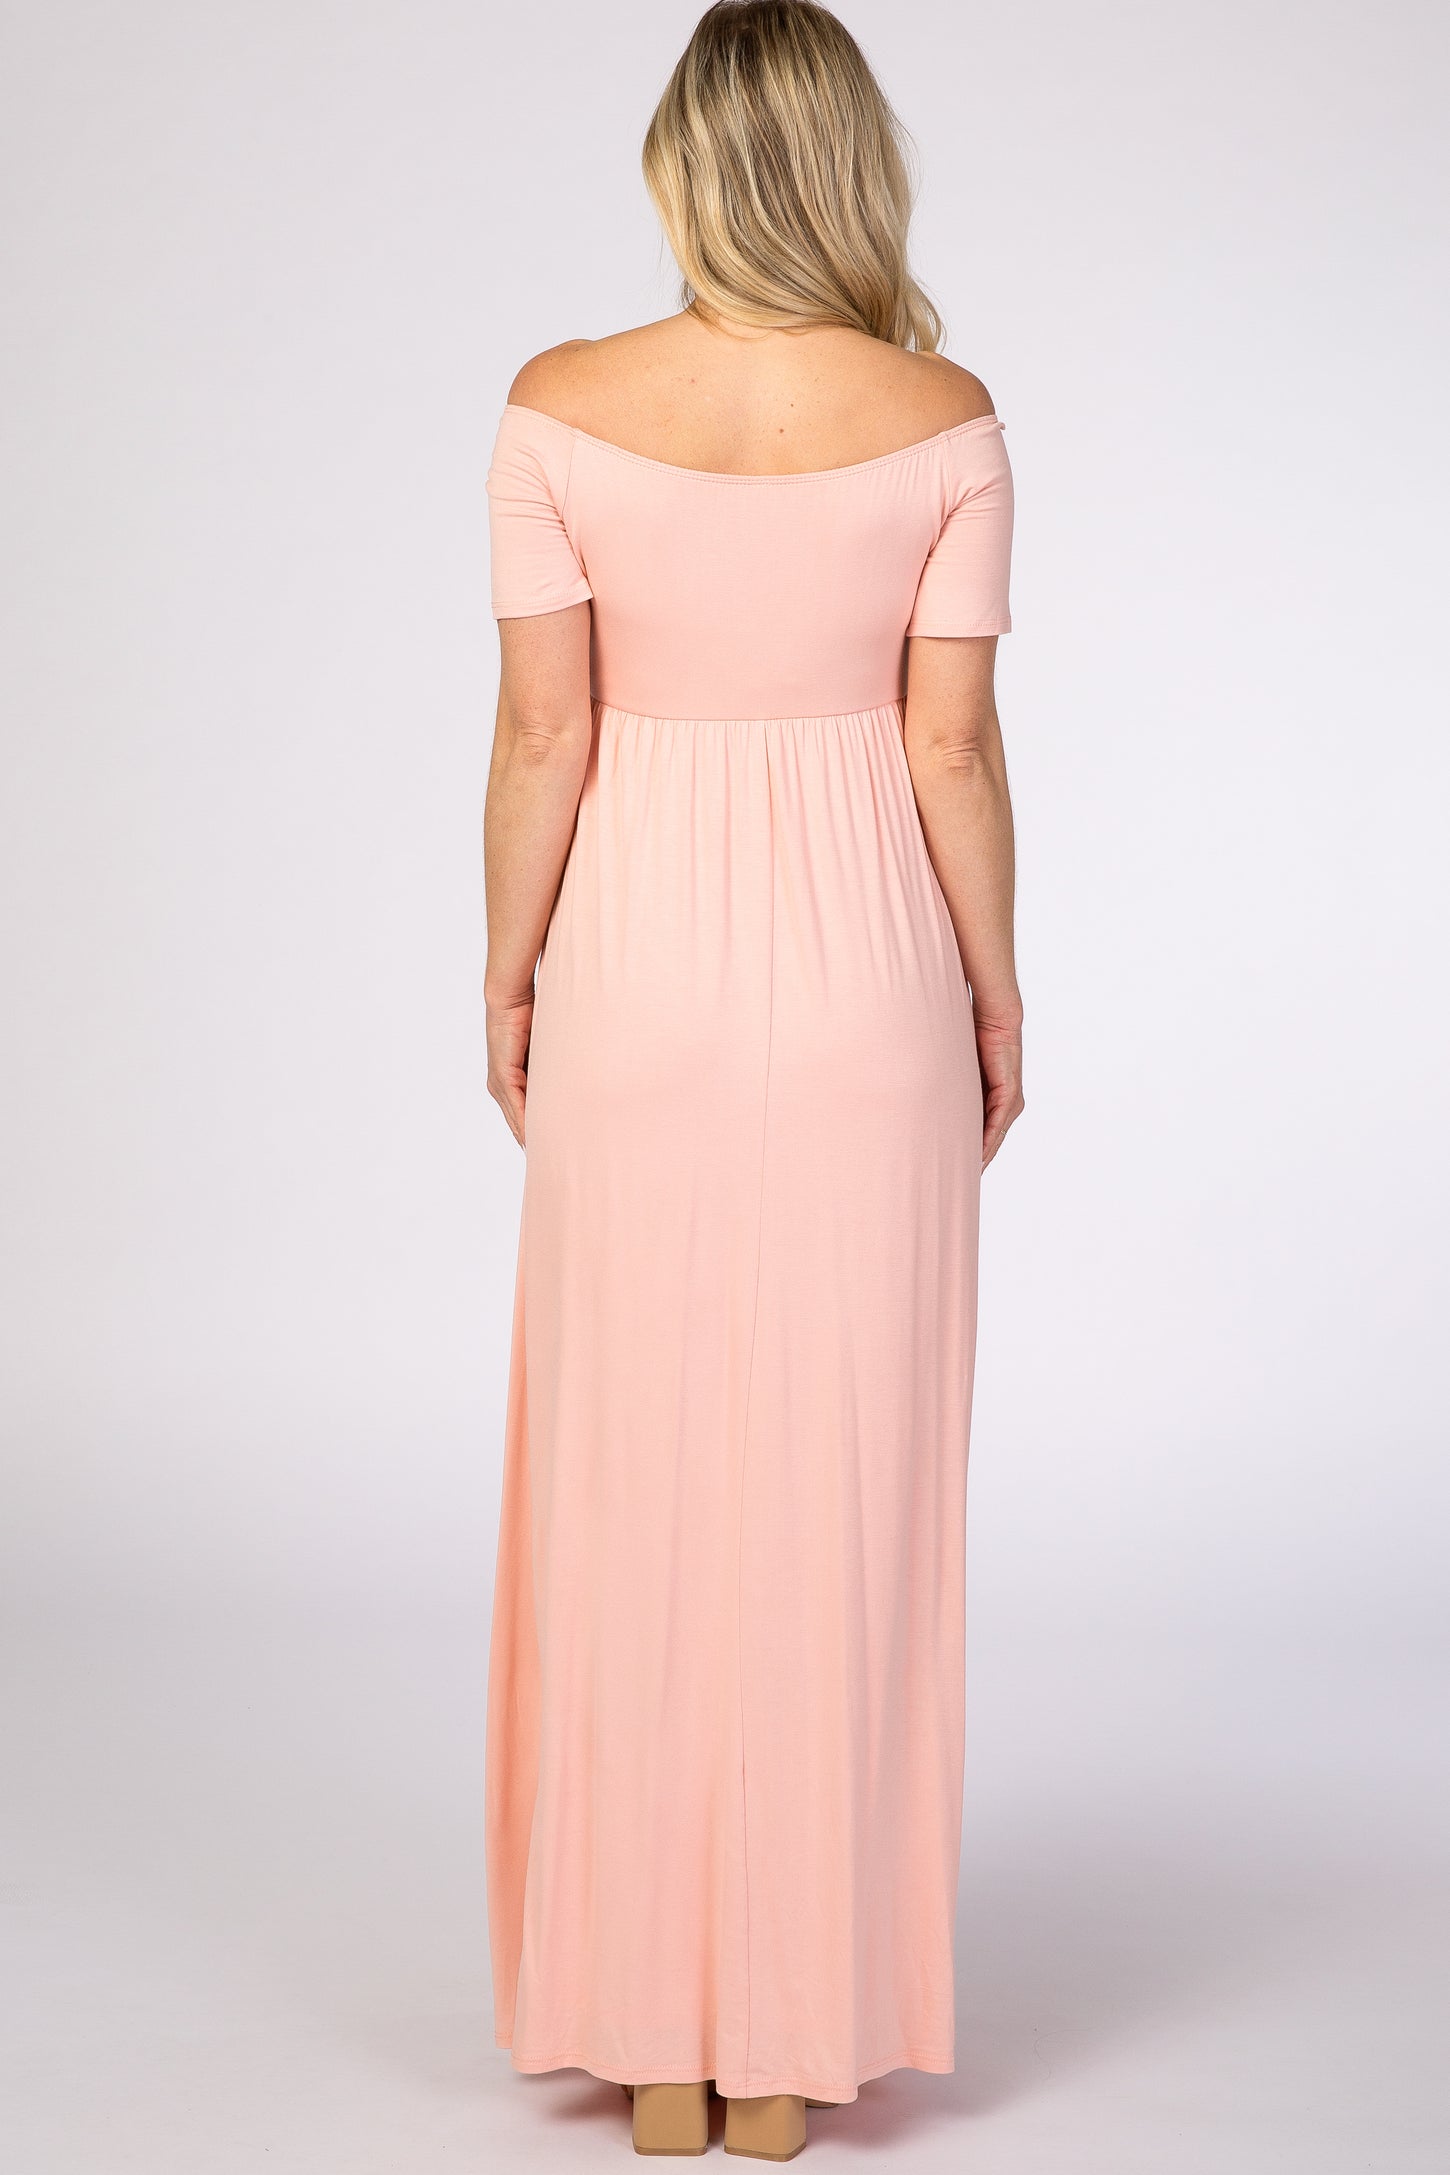 PinkBlush Light Pink Off The Shoulder Short Sleeve Maternity Maxi Dress